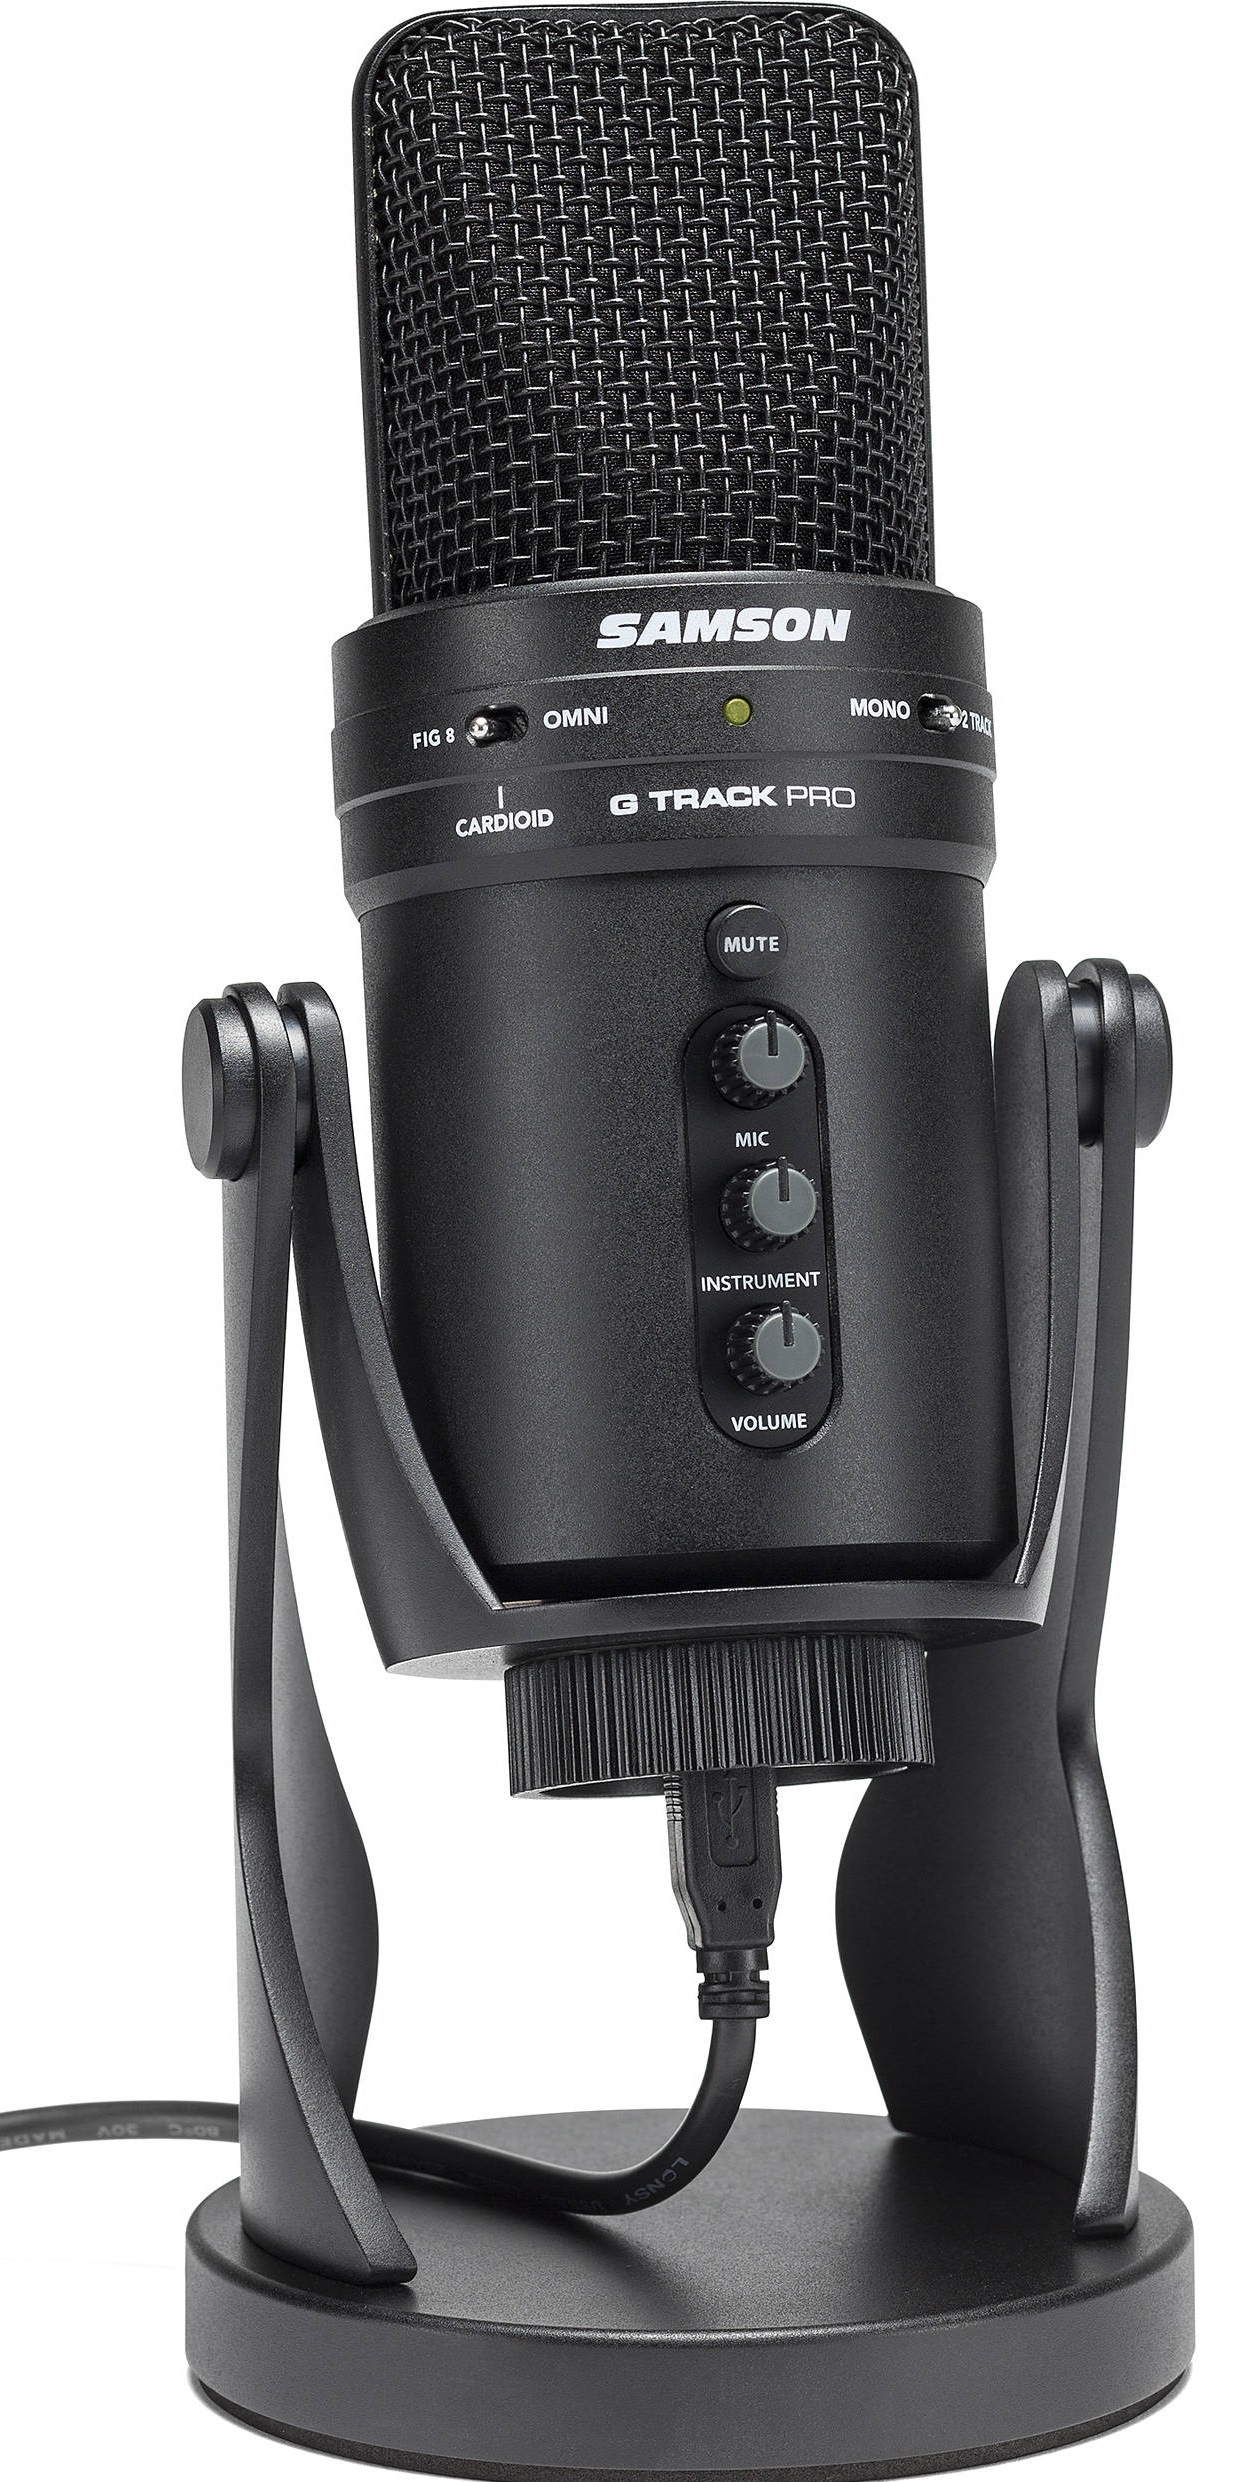 Samson Pro | Microphone with Audio Interface